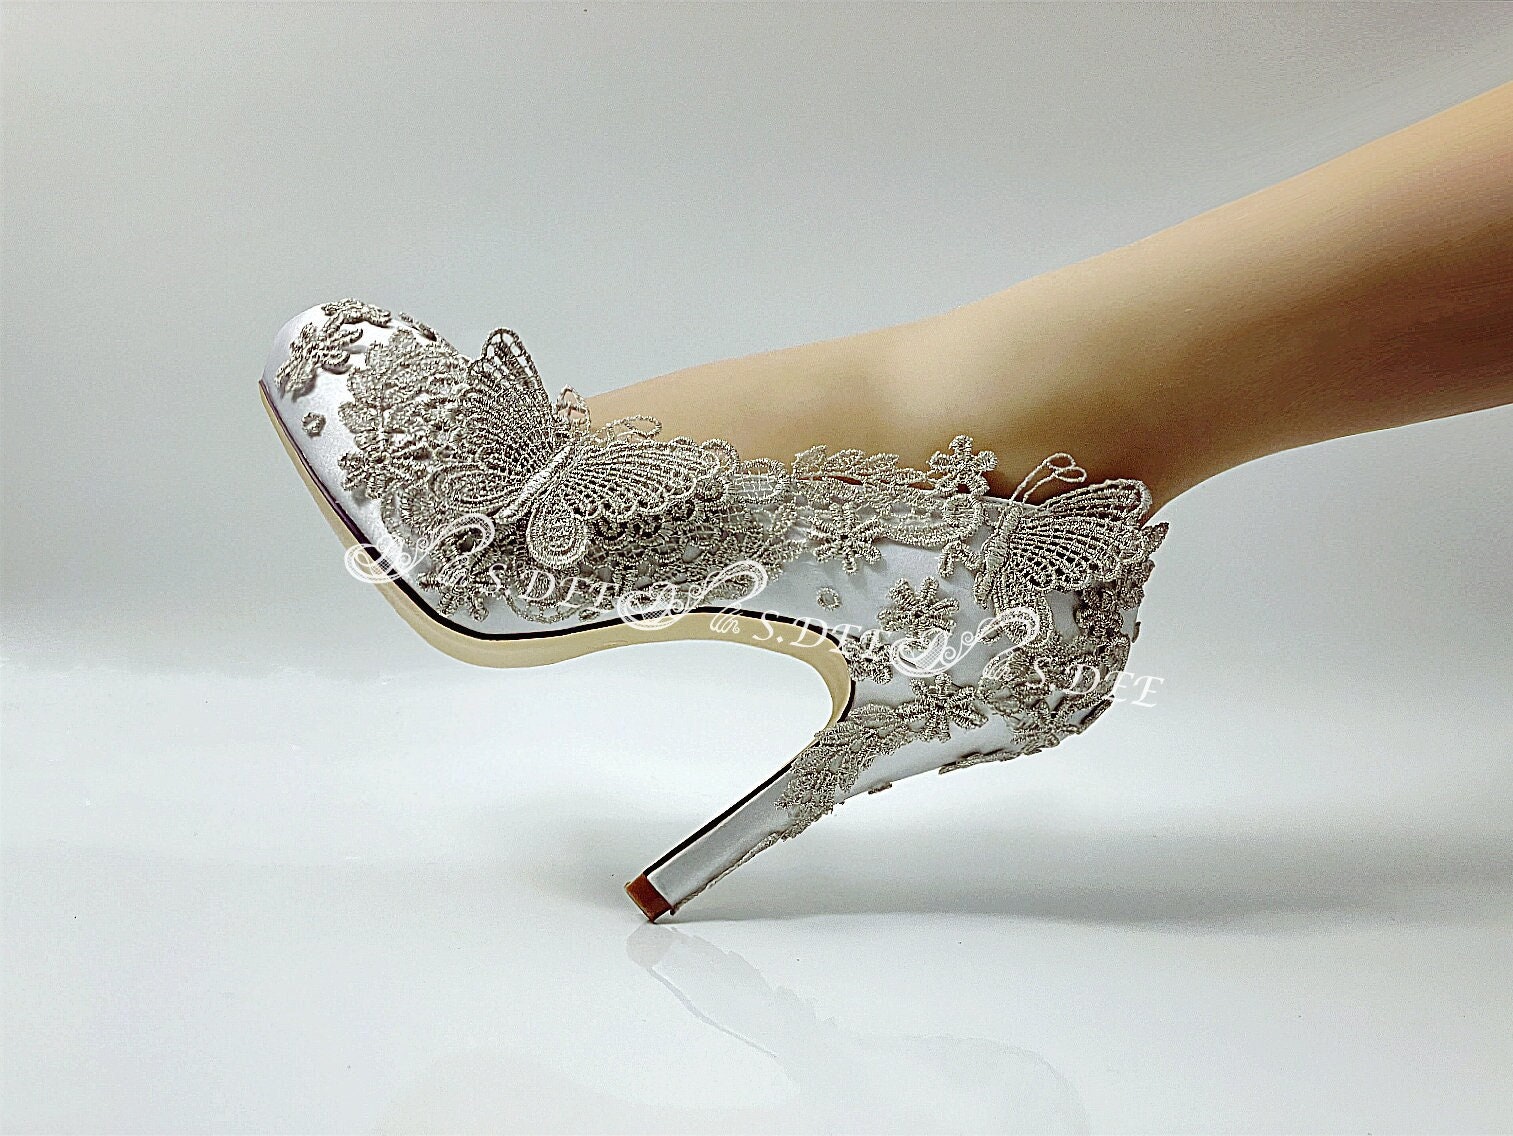 silver prom platform heels